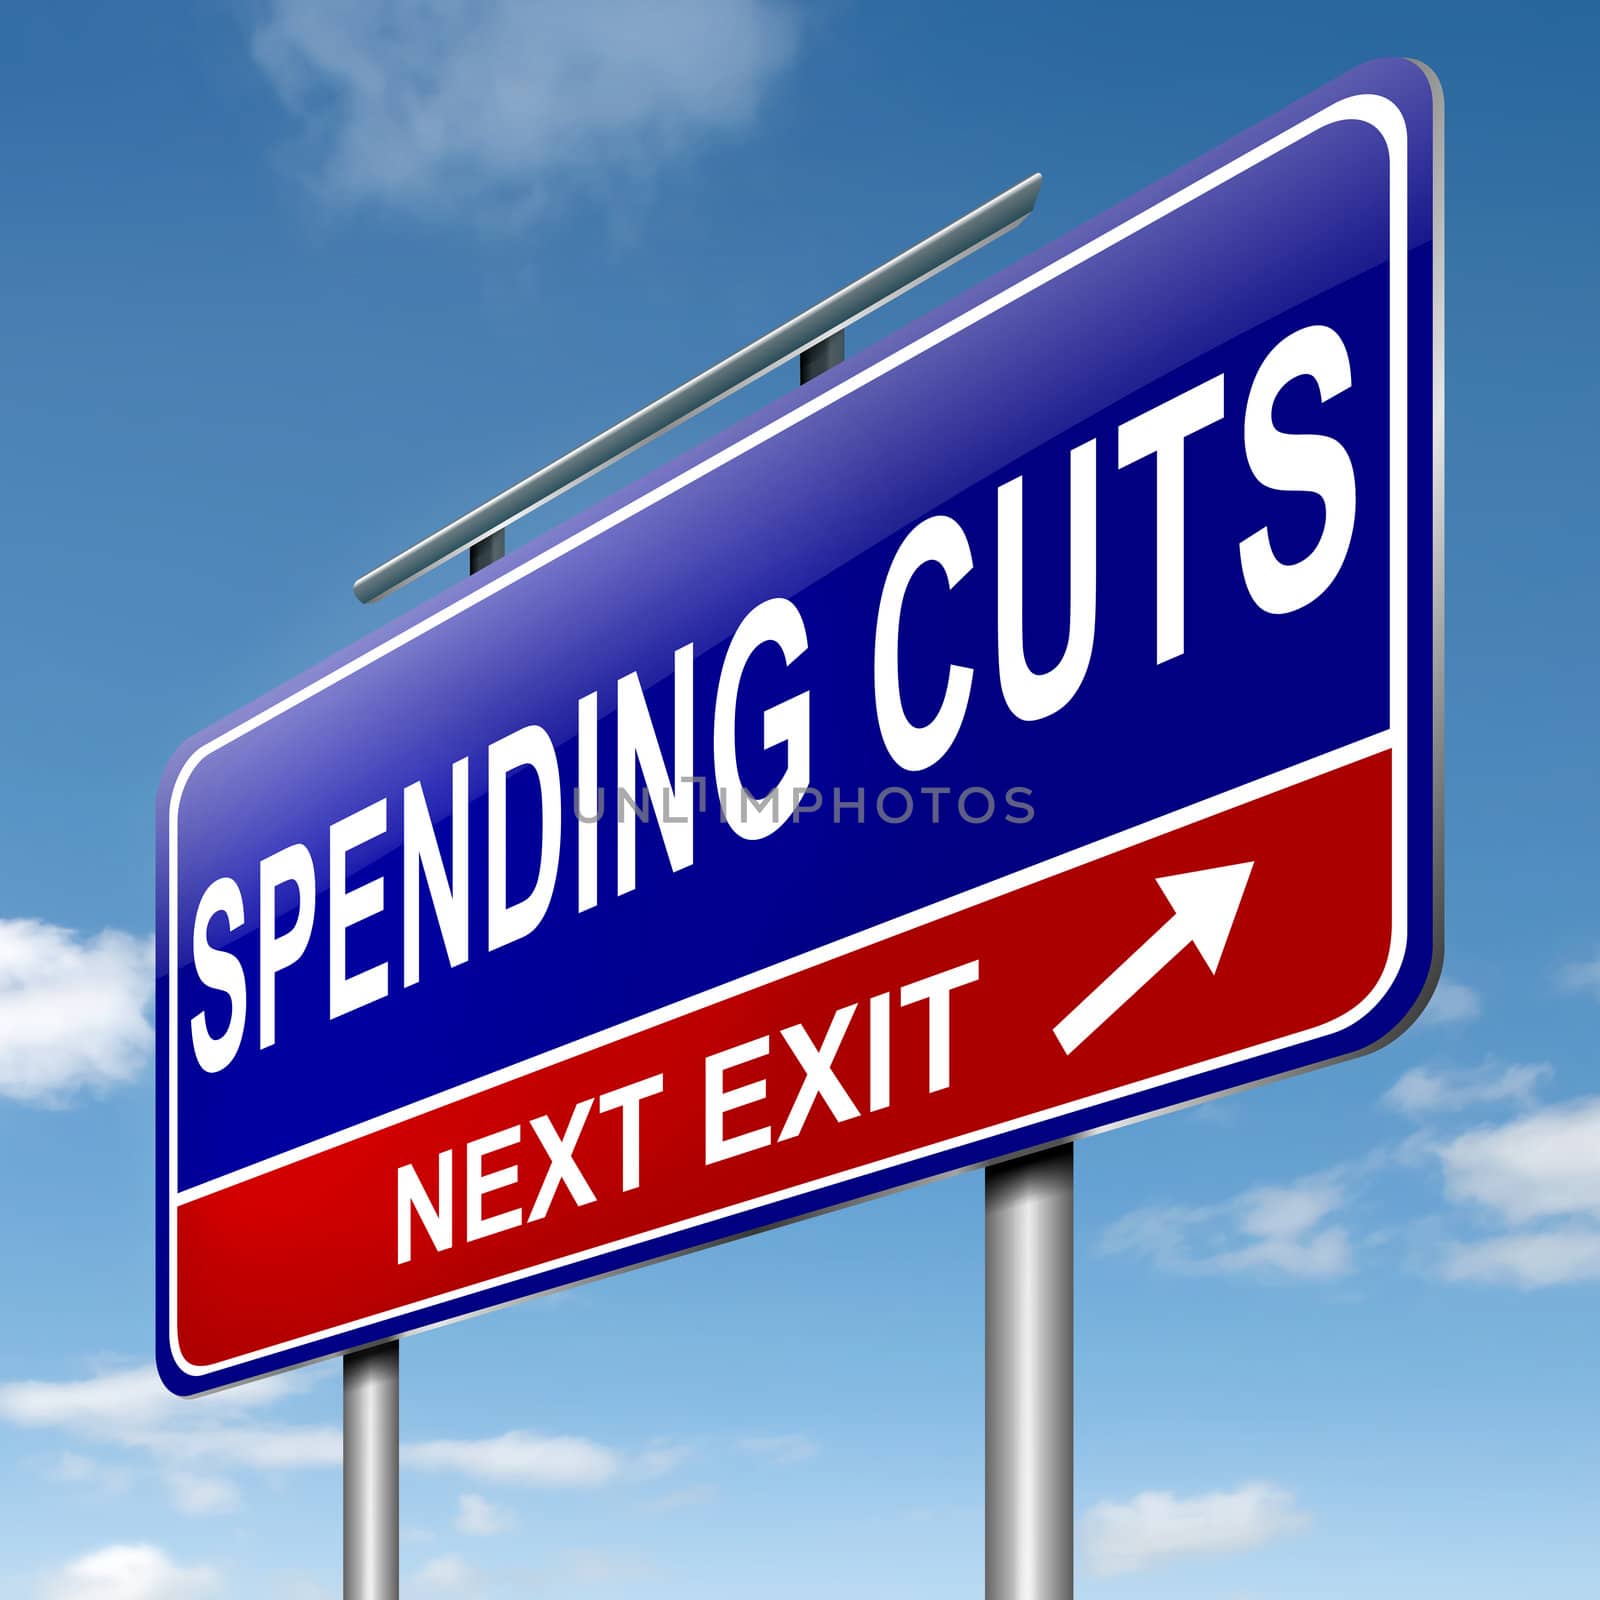 Spending cuts. by 72soul